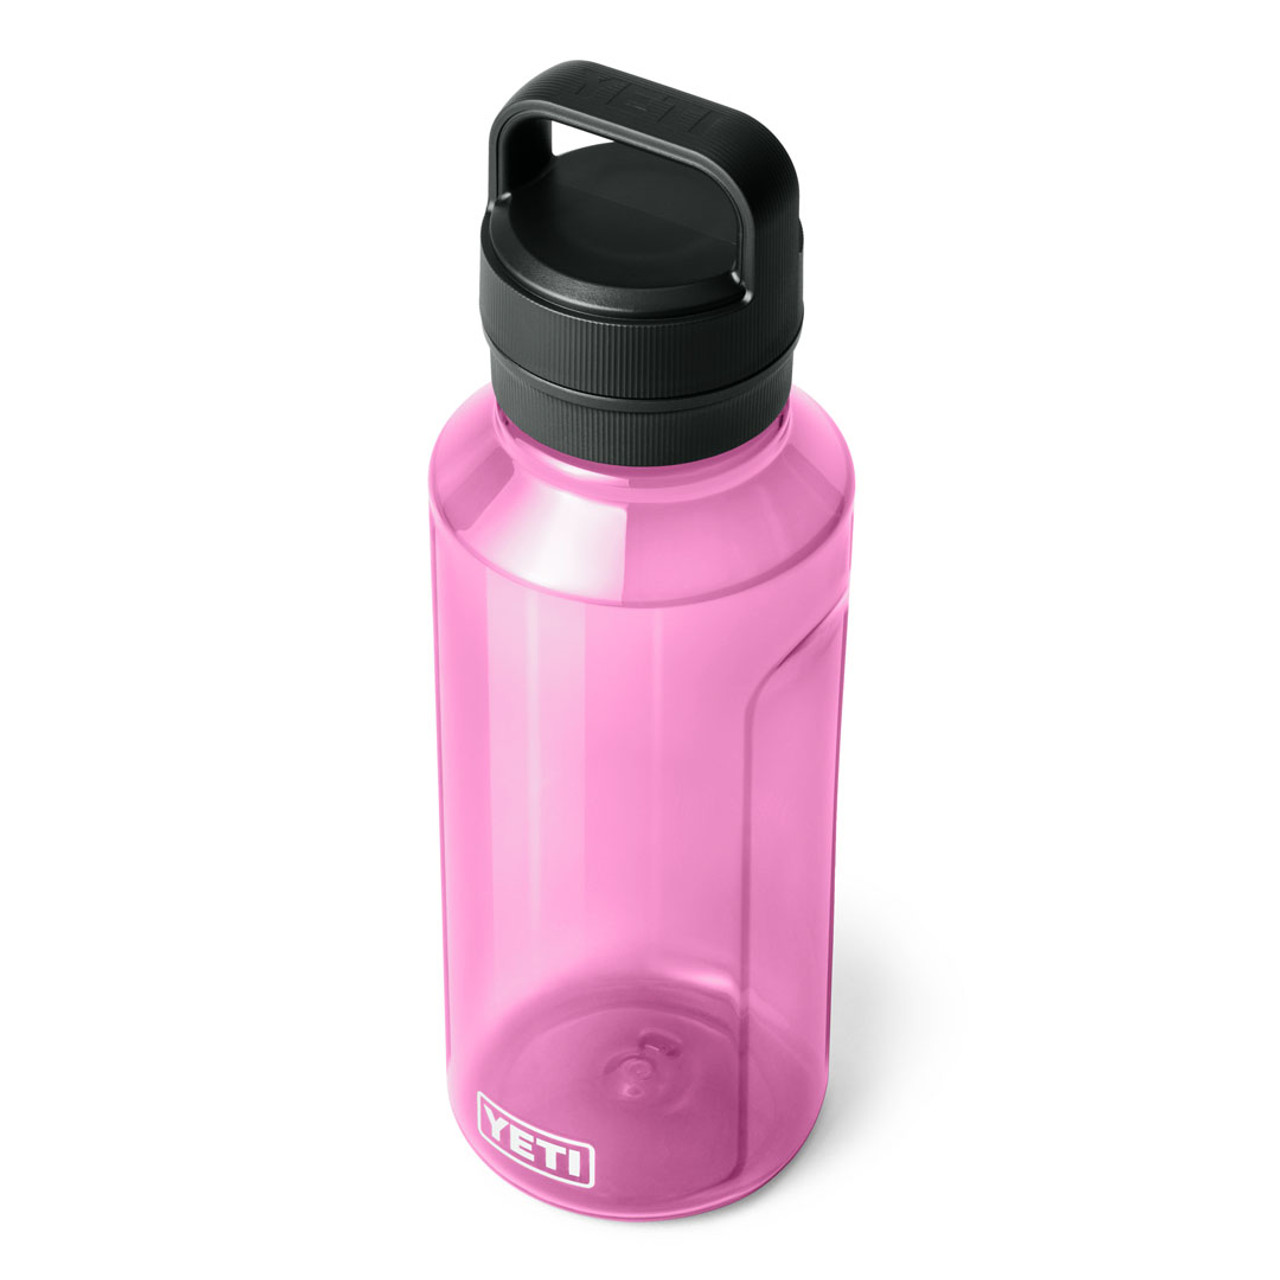 Yeti Yonder 1.5L / 50 oz Water Bottle - Power Pink